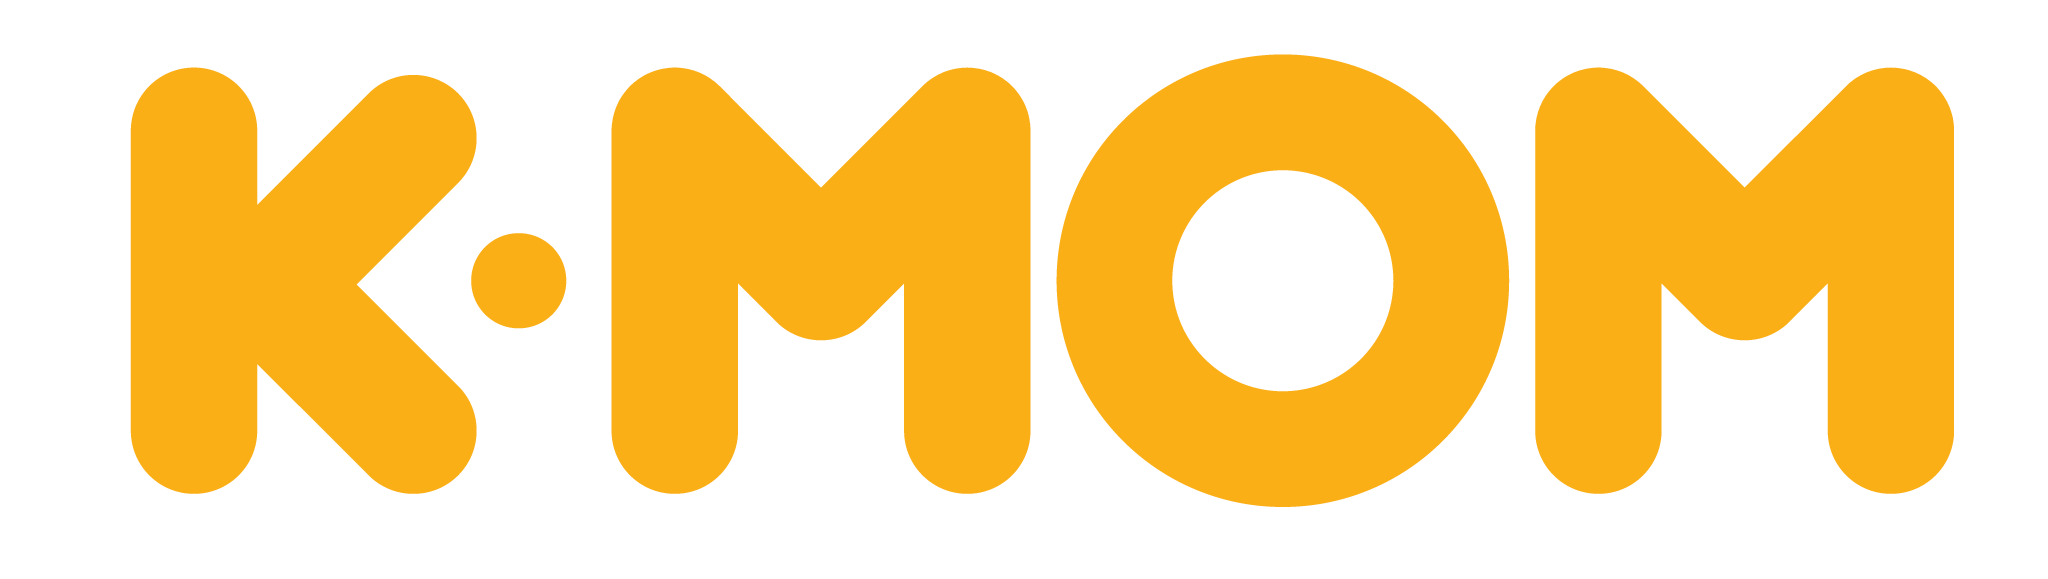 kmom-logo